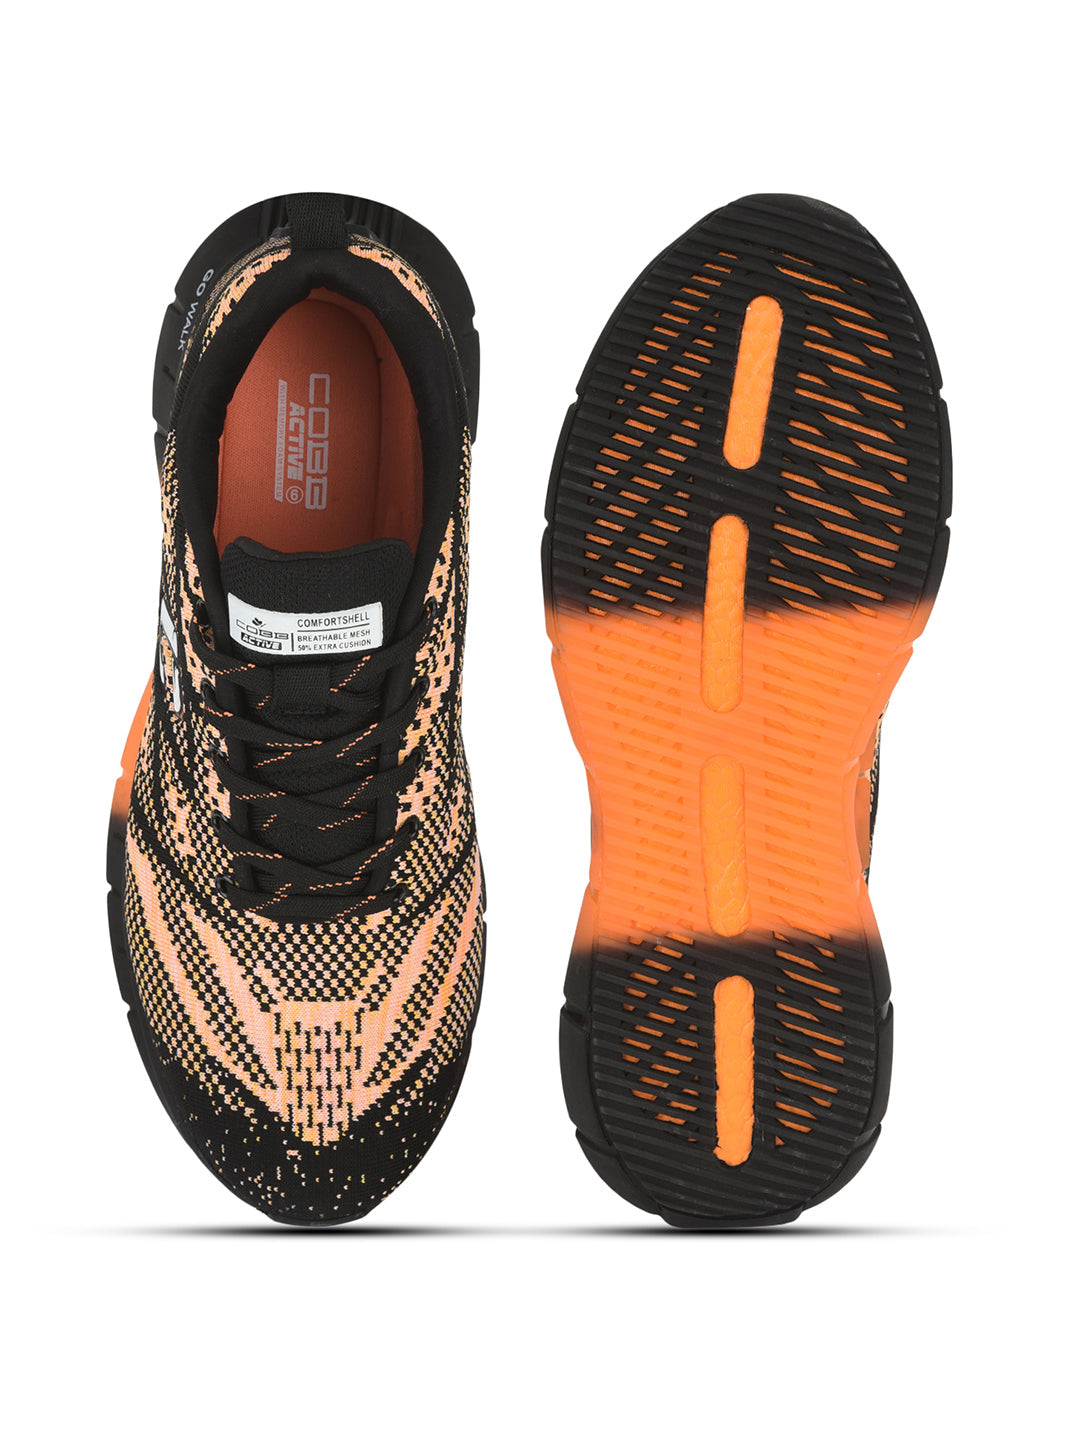 Cobb Mens Orange Running Shoes